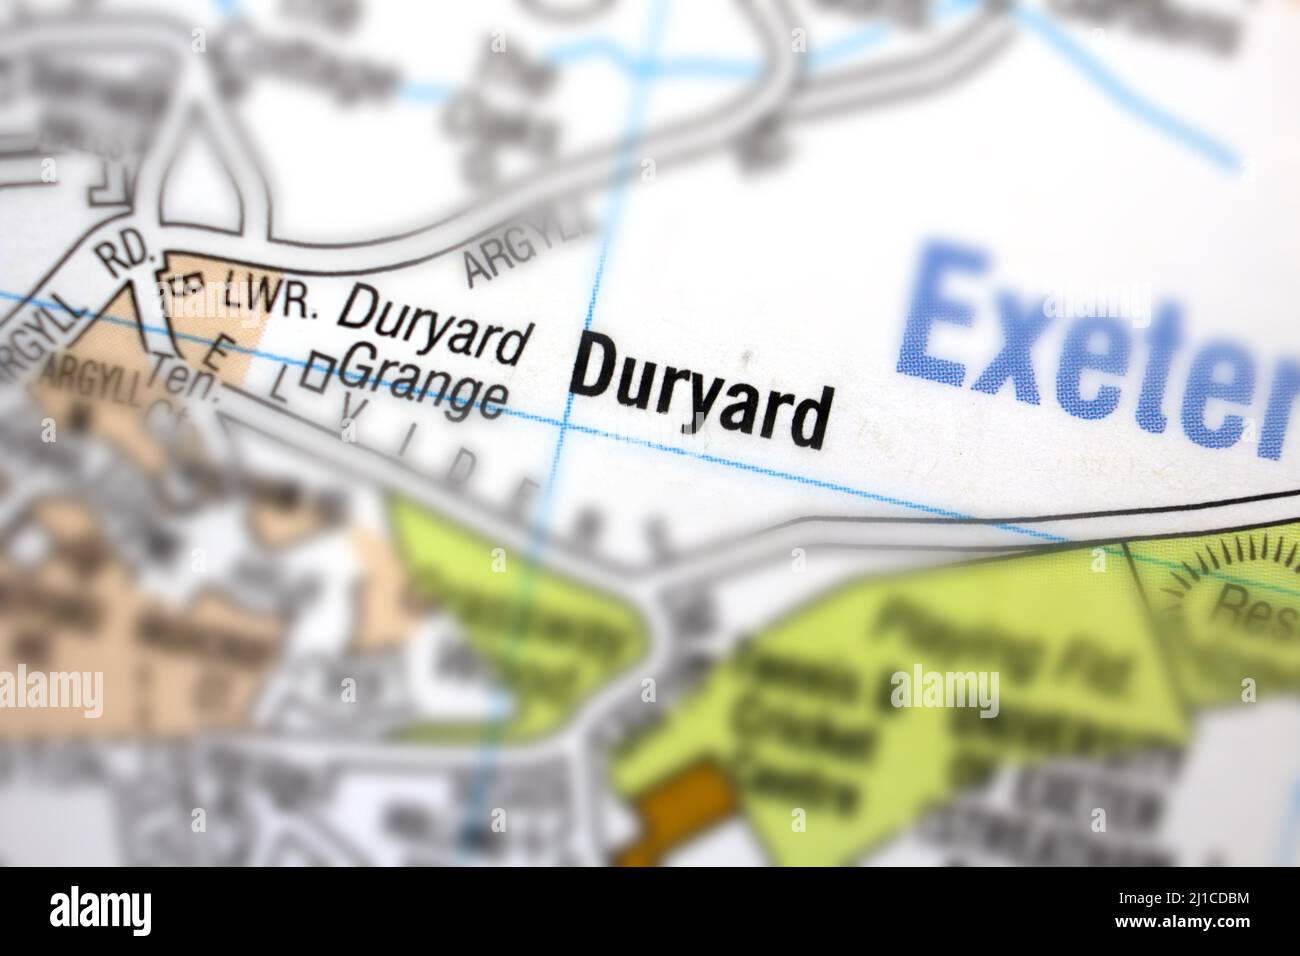 Duryard district - Exeter City, Devon, United Kingdom colour atlas map town plan and name Stock Photo